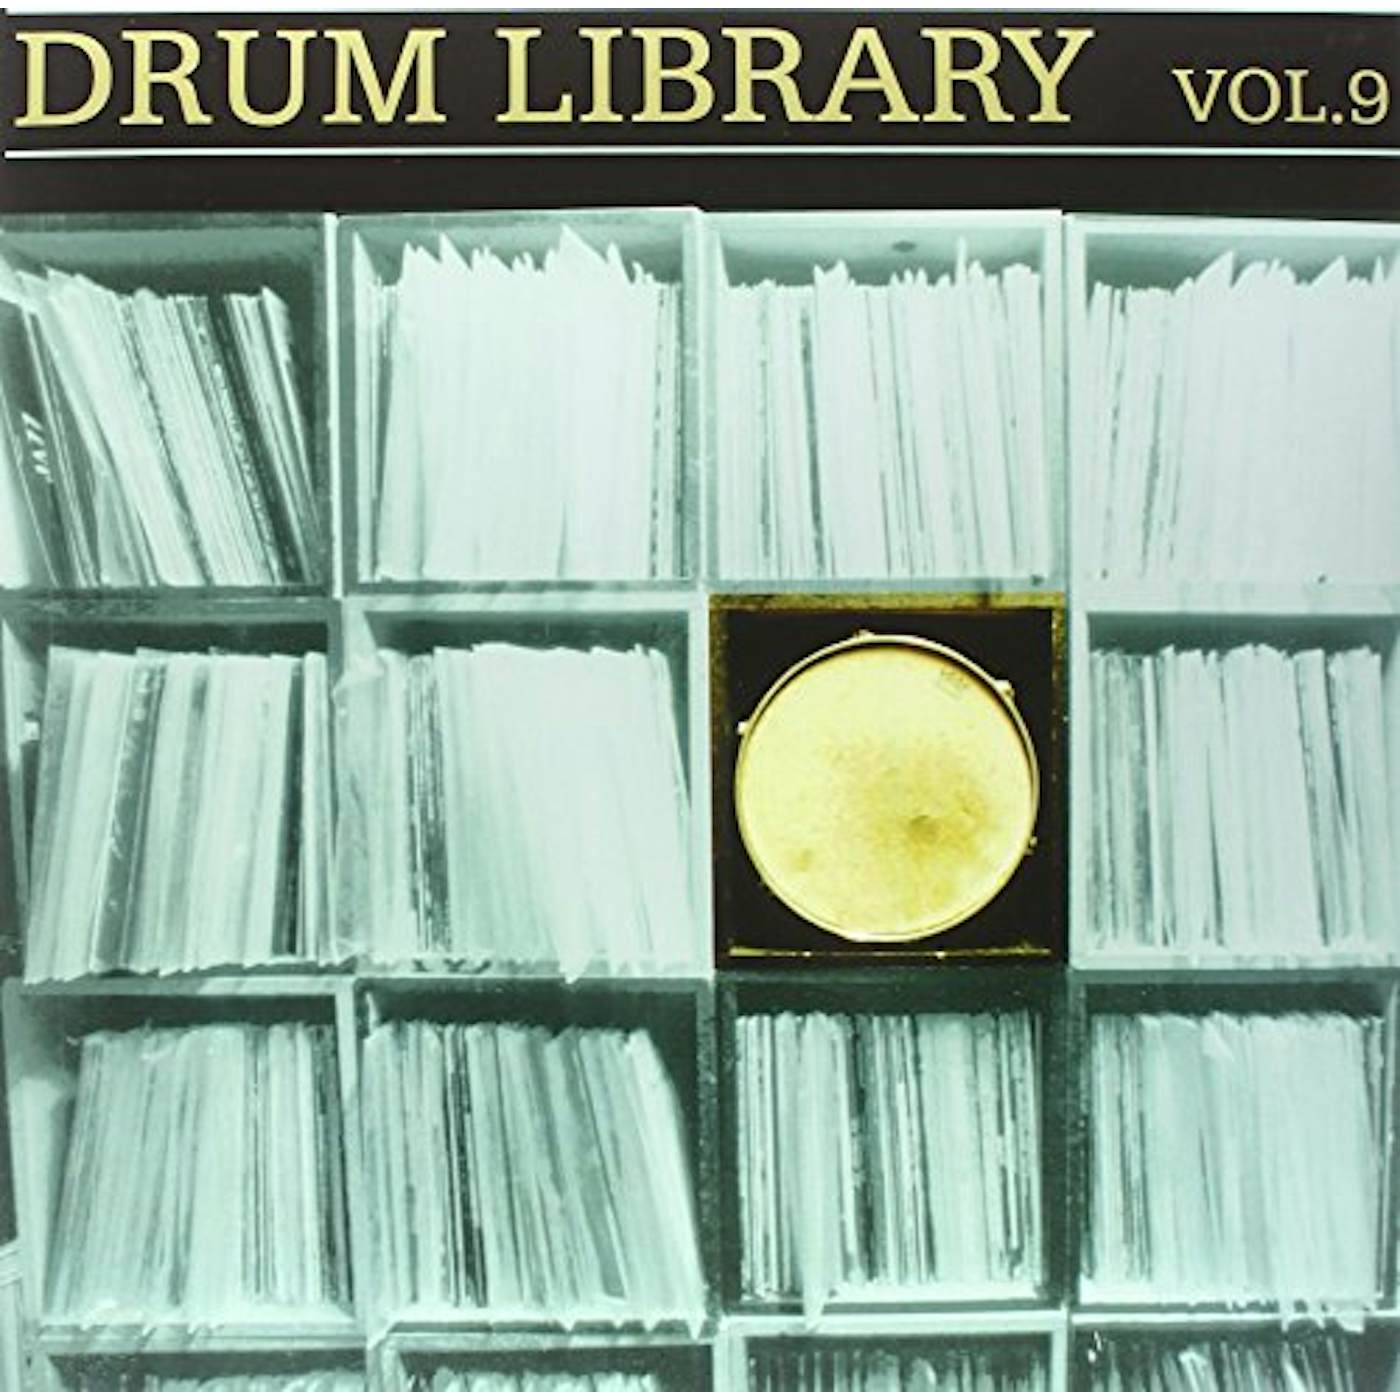 Paul Nice DRUM LIBRARY 9 Vinyl Record